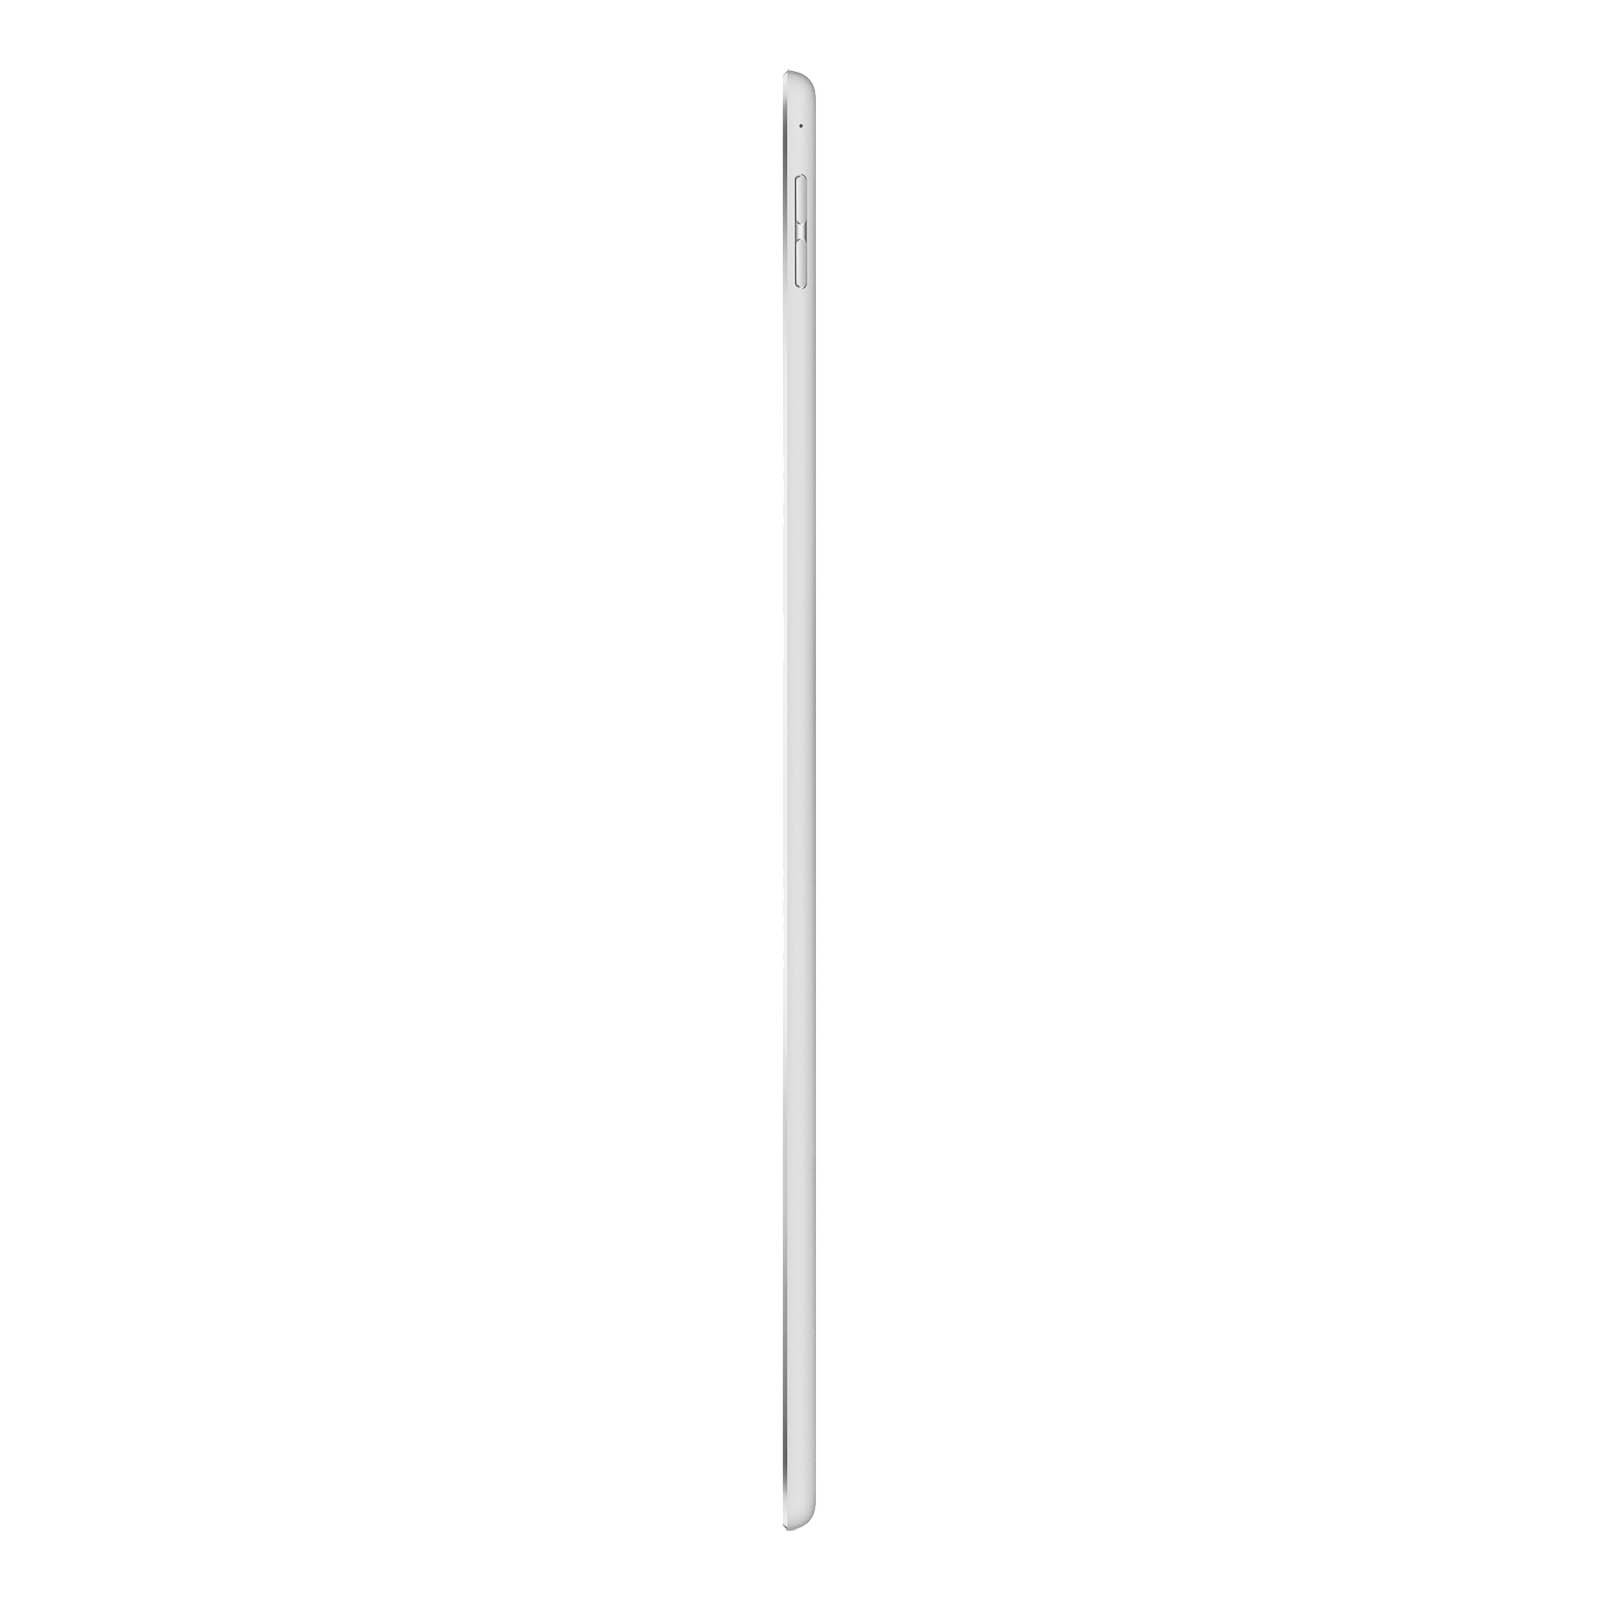 iPad Pro 12.9 Inch 2nd Gen 64GB Silver Very Good - WiFi